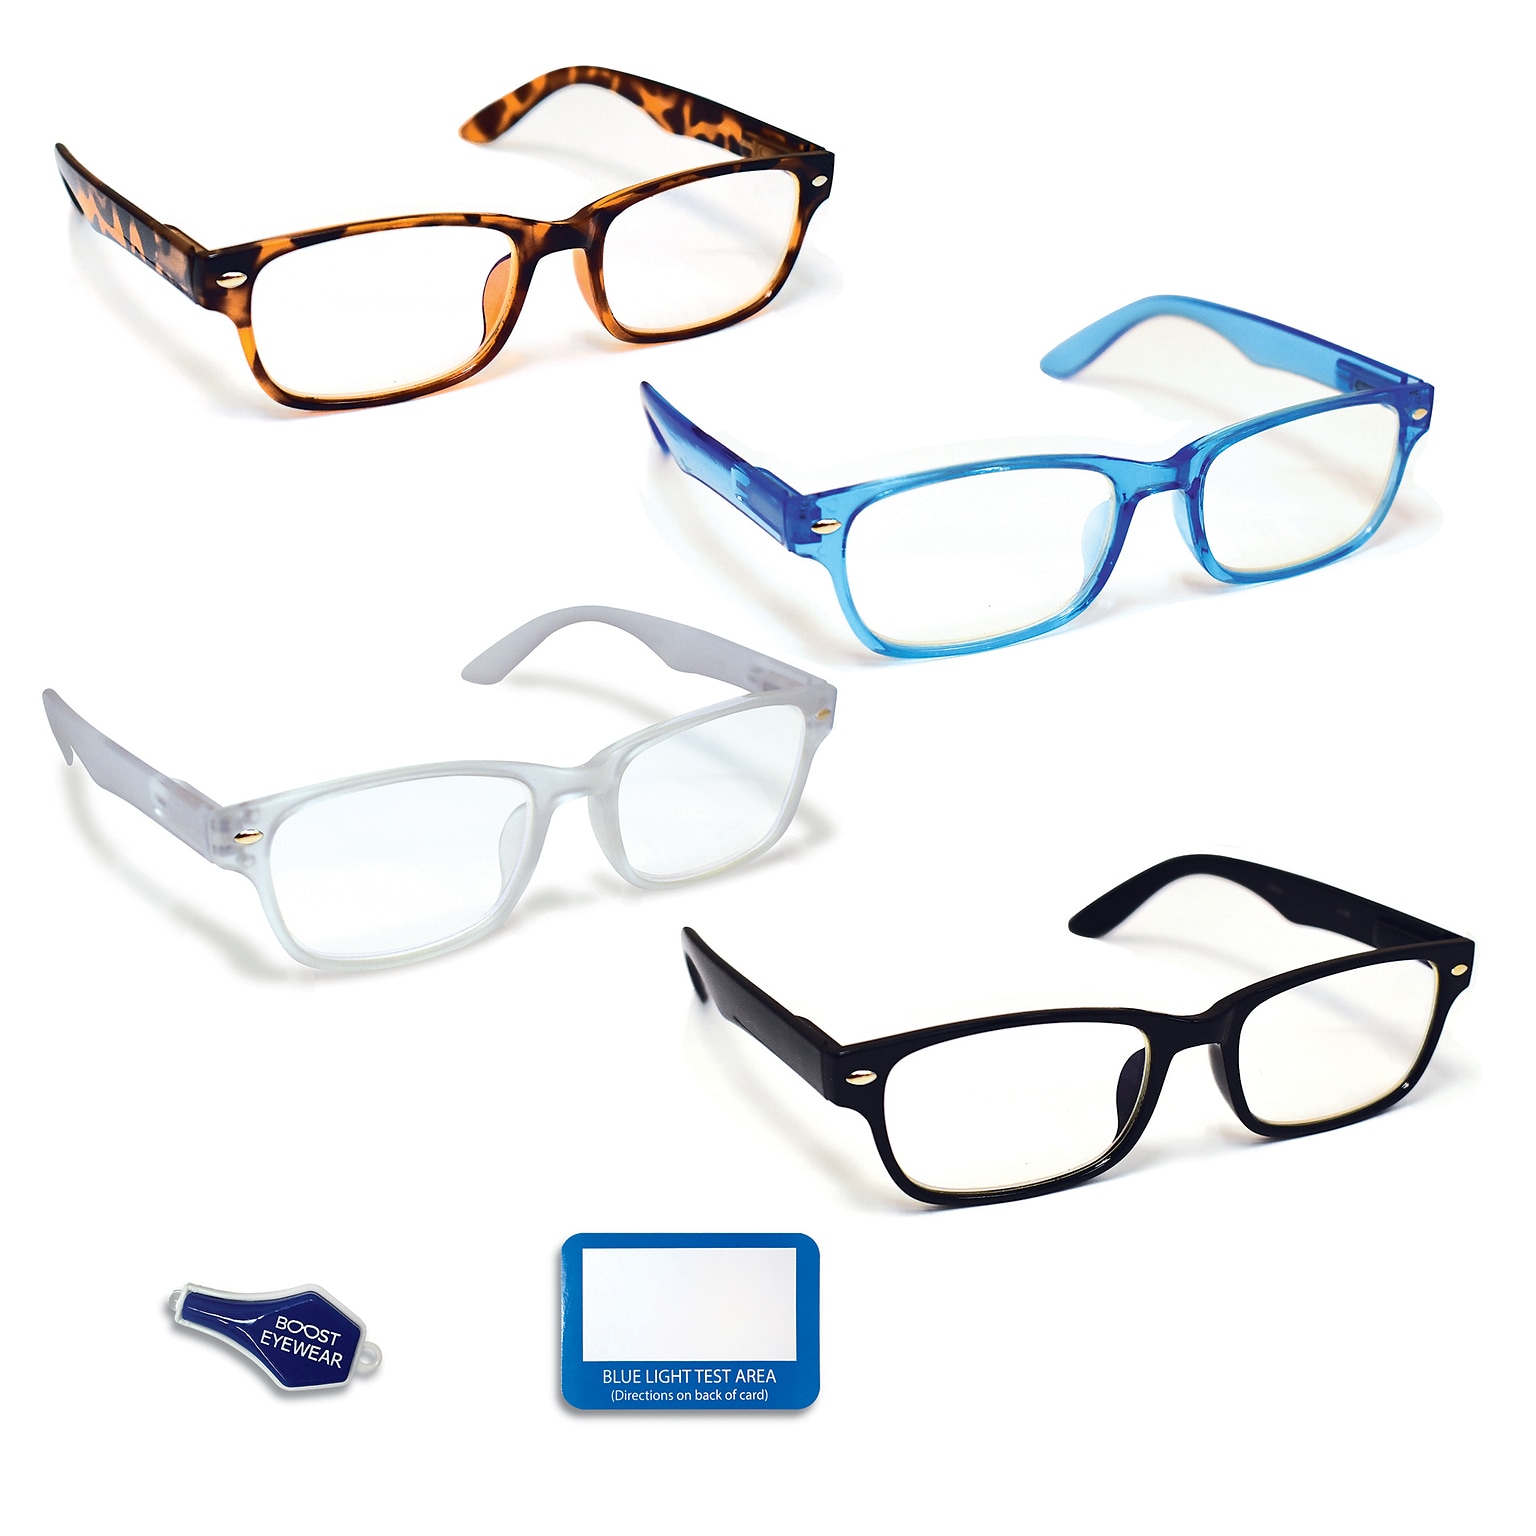 Boost Eyewear Reading Glasses Blue Light Blockers +2.0 Rectangular Frames Assorted Colors (20200-4PK0